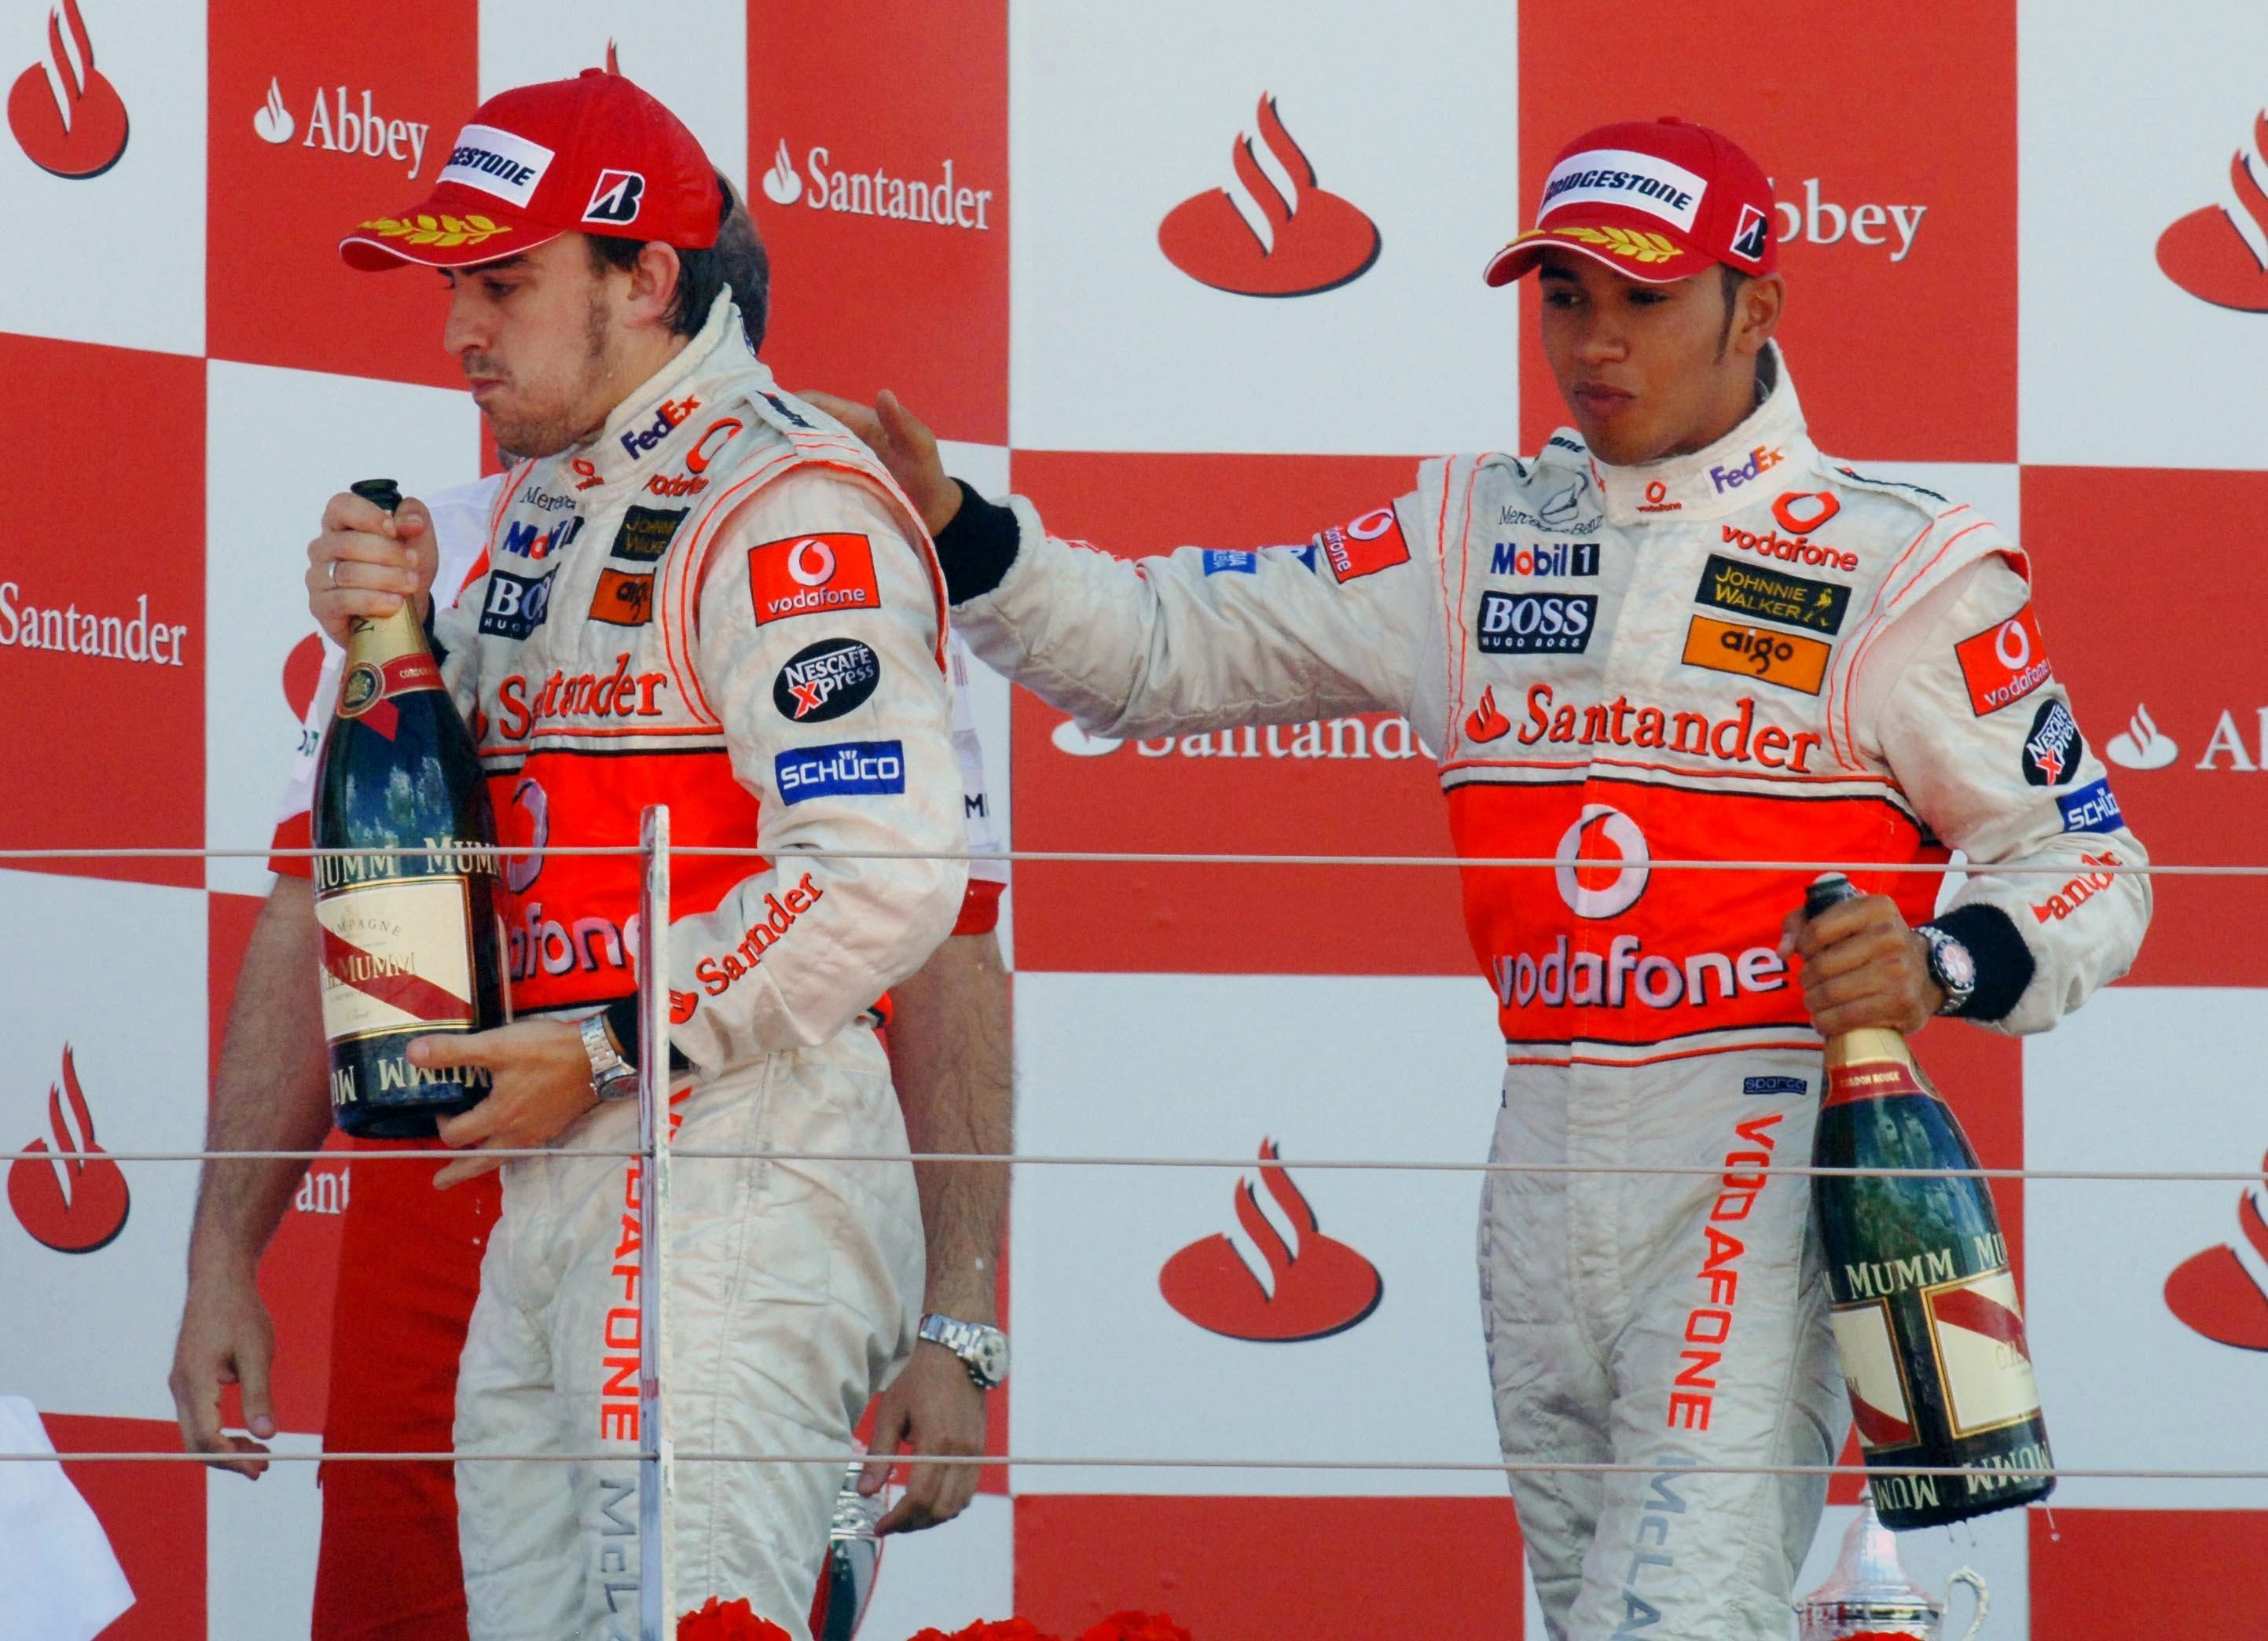 Fernando Alonso and Lewis Hamilton were teammates at McLaren in 2007